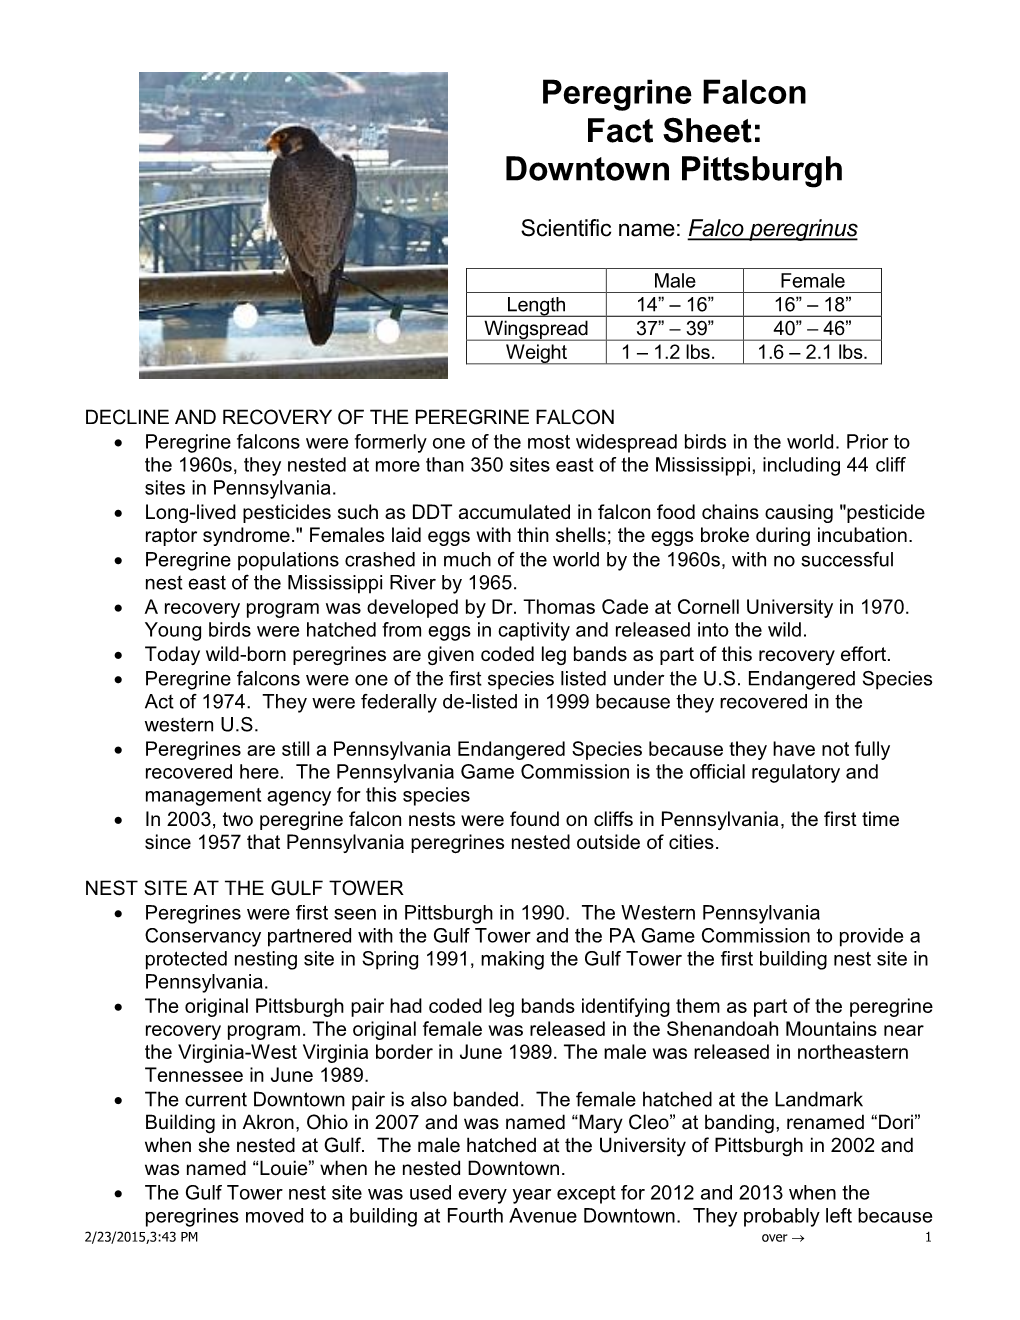 Peregrine Falcon Fact Sheet: Downtown Pittsburgh